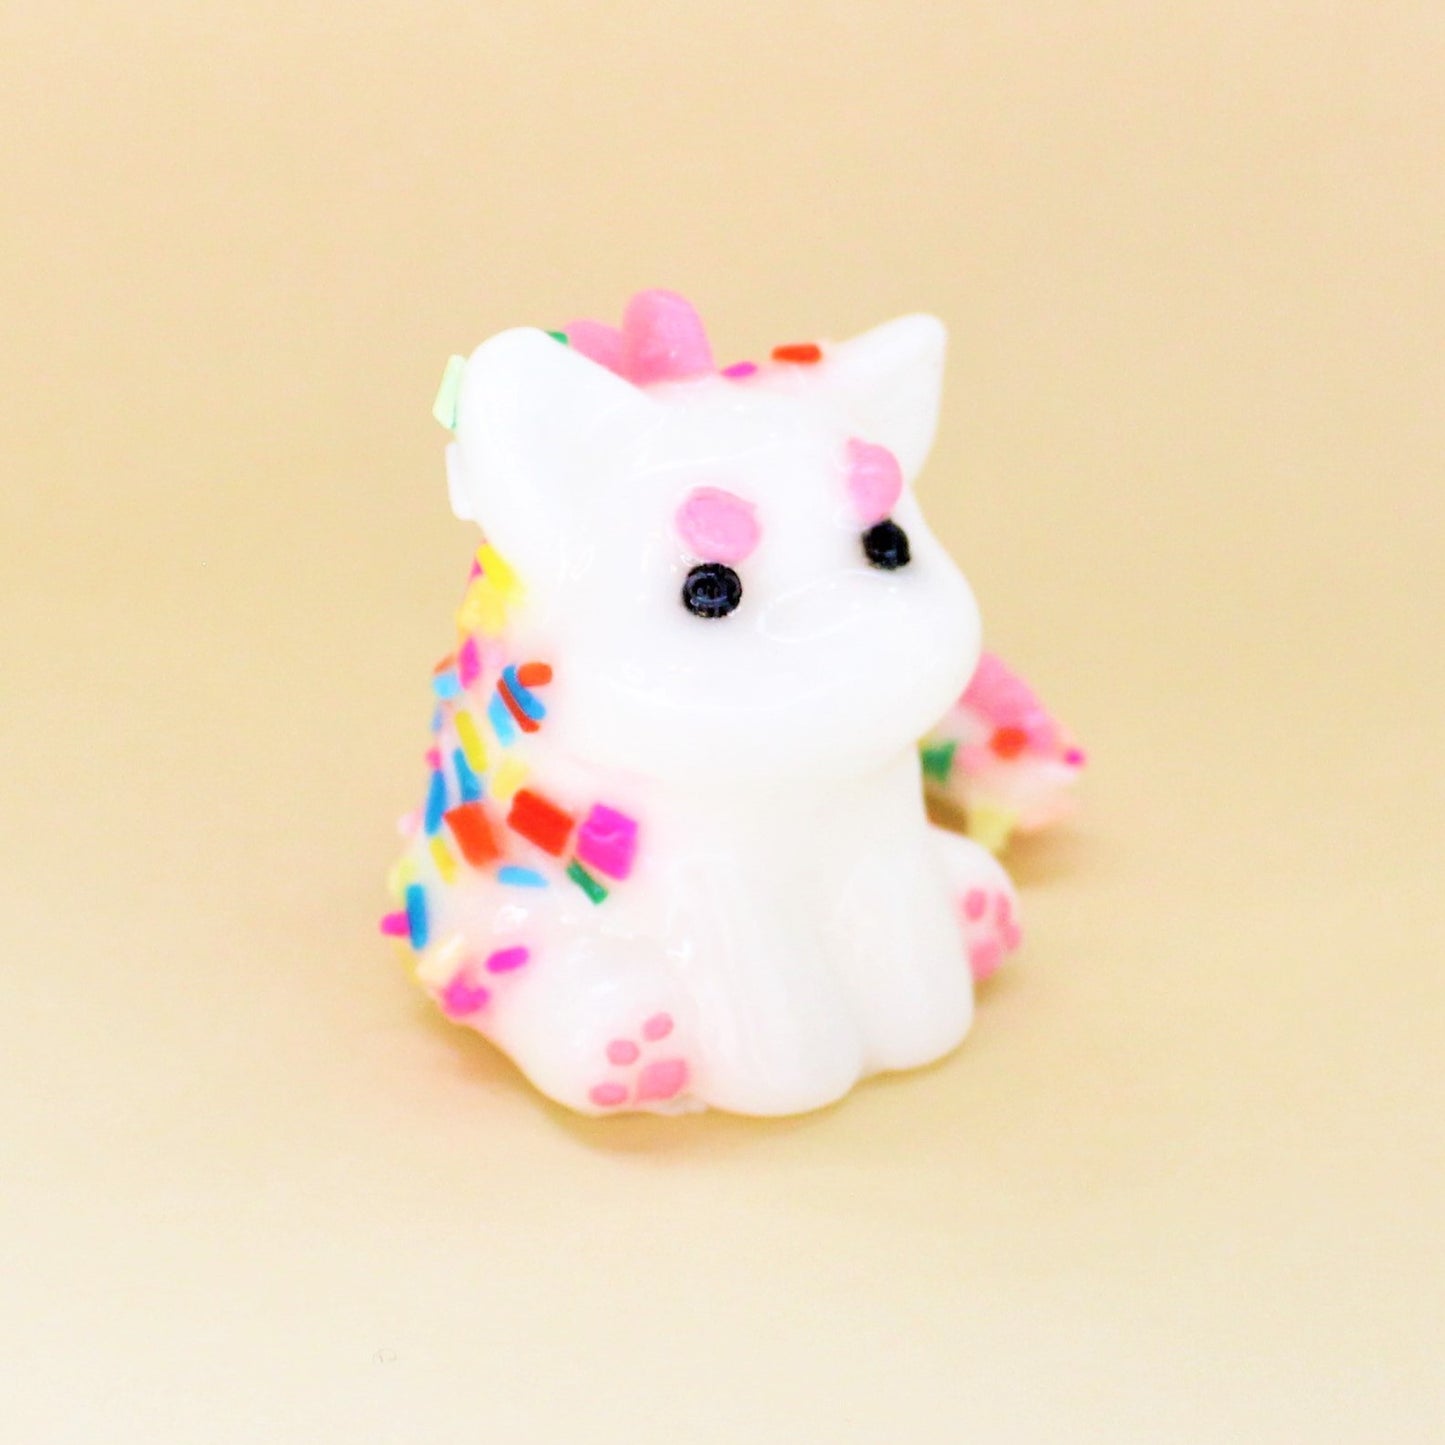 Dinocat Pink Ice Cream Sprinkle Figure / Handmade Resin Art Toy Mini Fig / Adorable Cat Dinosaur / Desk Decoration Collectable / Chibi